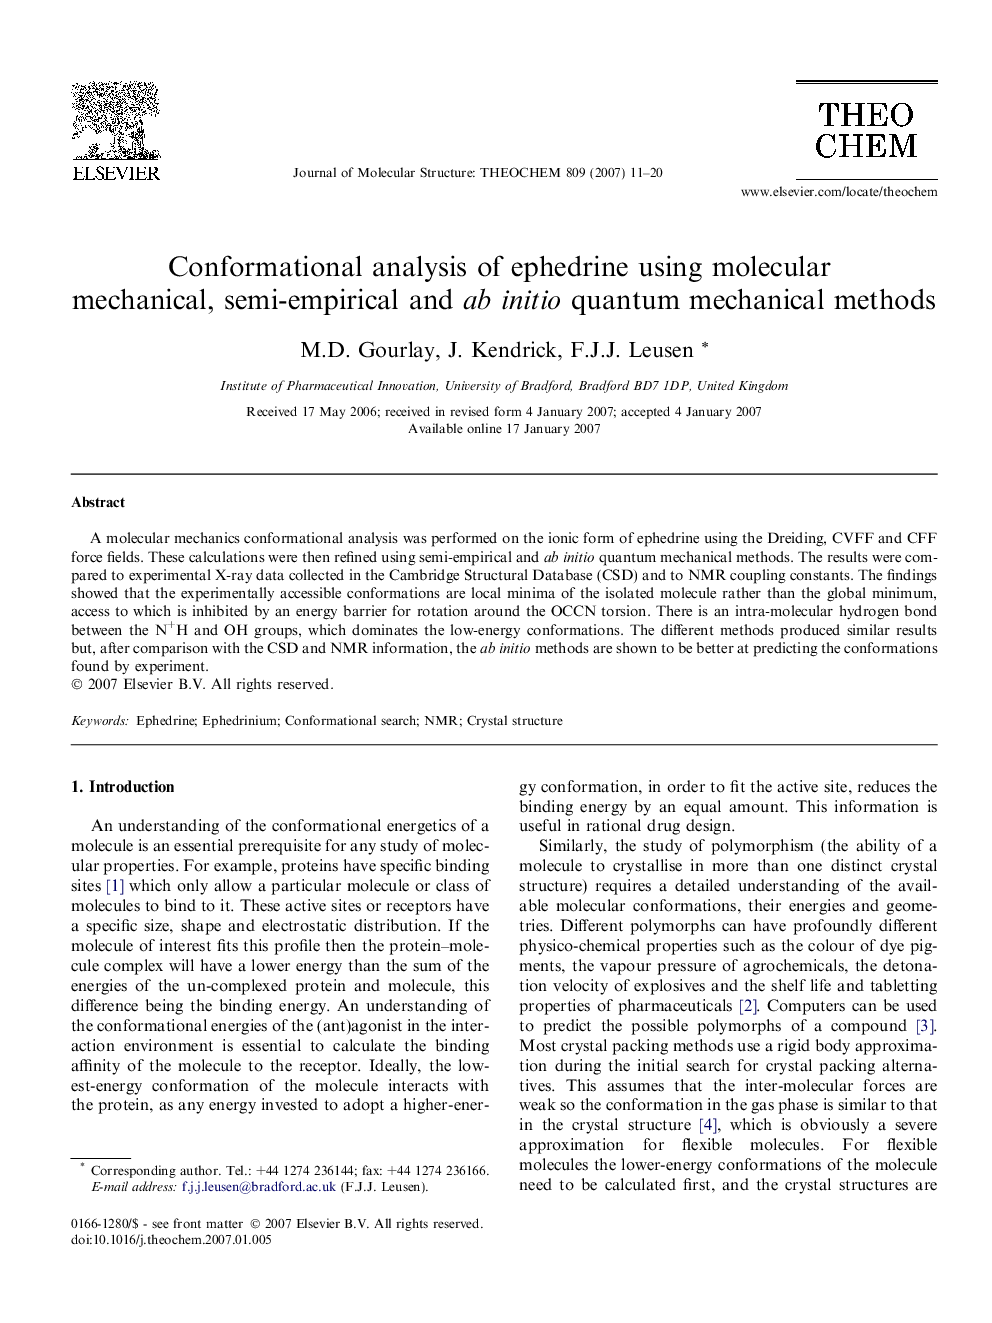 Conformational analysis of ephedrine using molecular mechanical, semi-empirical and ab initio quantum mechanical methods